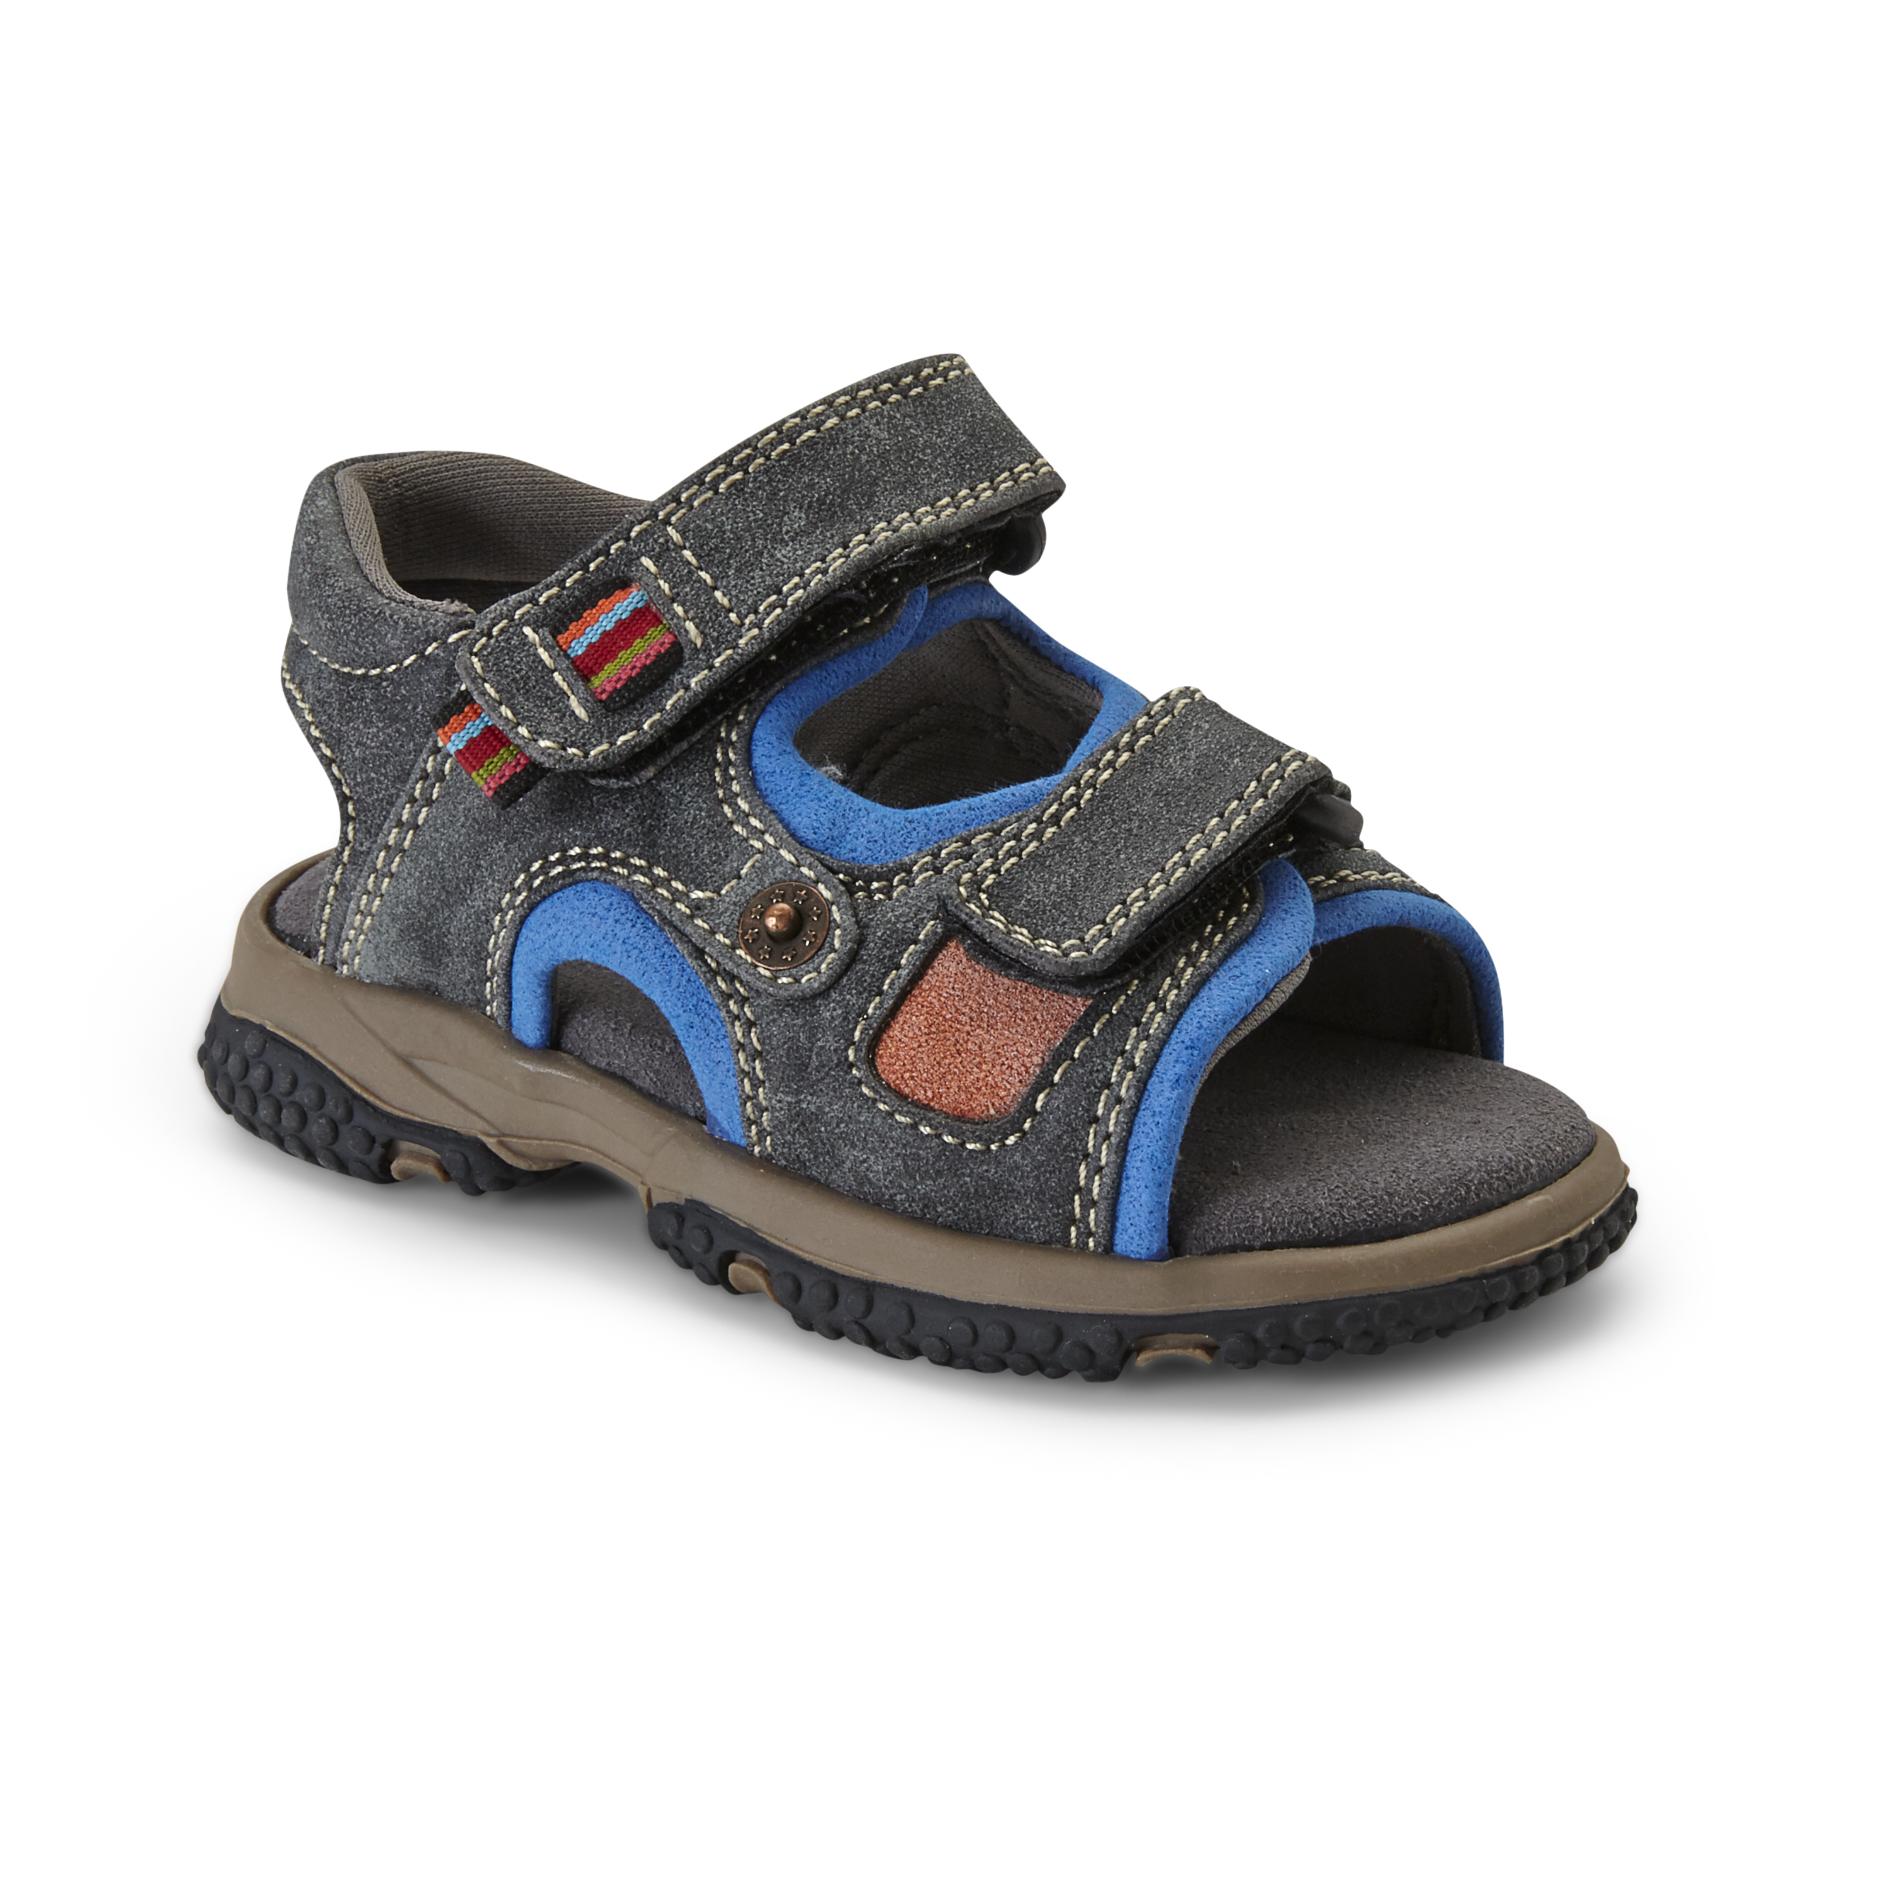 Rachel Shoes Toddler Boy's Max Grey/Blue Sandal